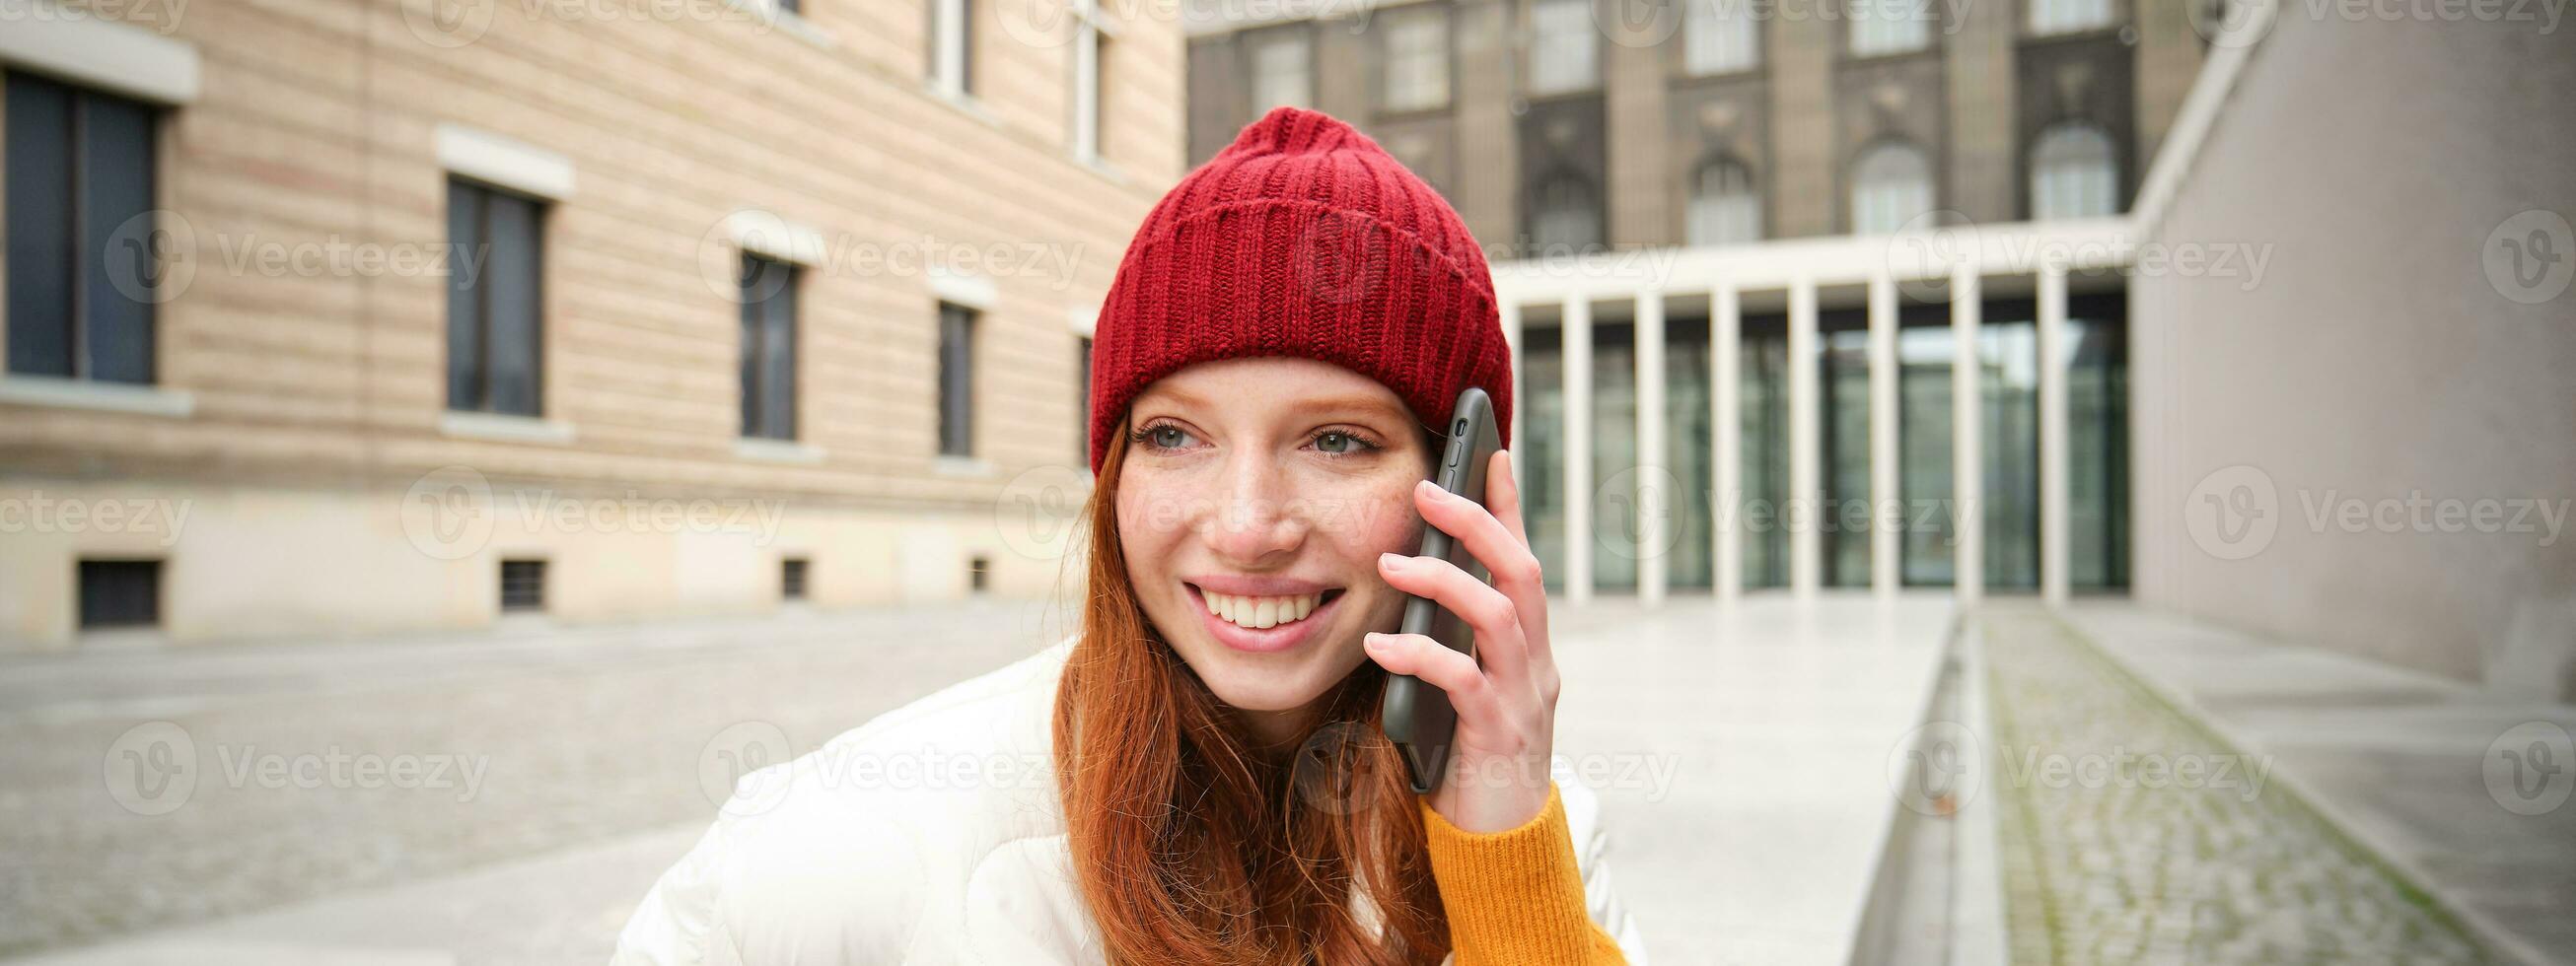 elegant modern roodharige meisje praat Aan mobiel telefoon, maakt een telefoon telefoongesprek, roeping iemand Aan smartphone app van buiten, staat Aan straat en glimlacht foto